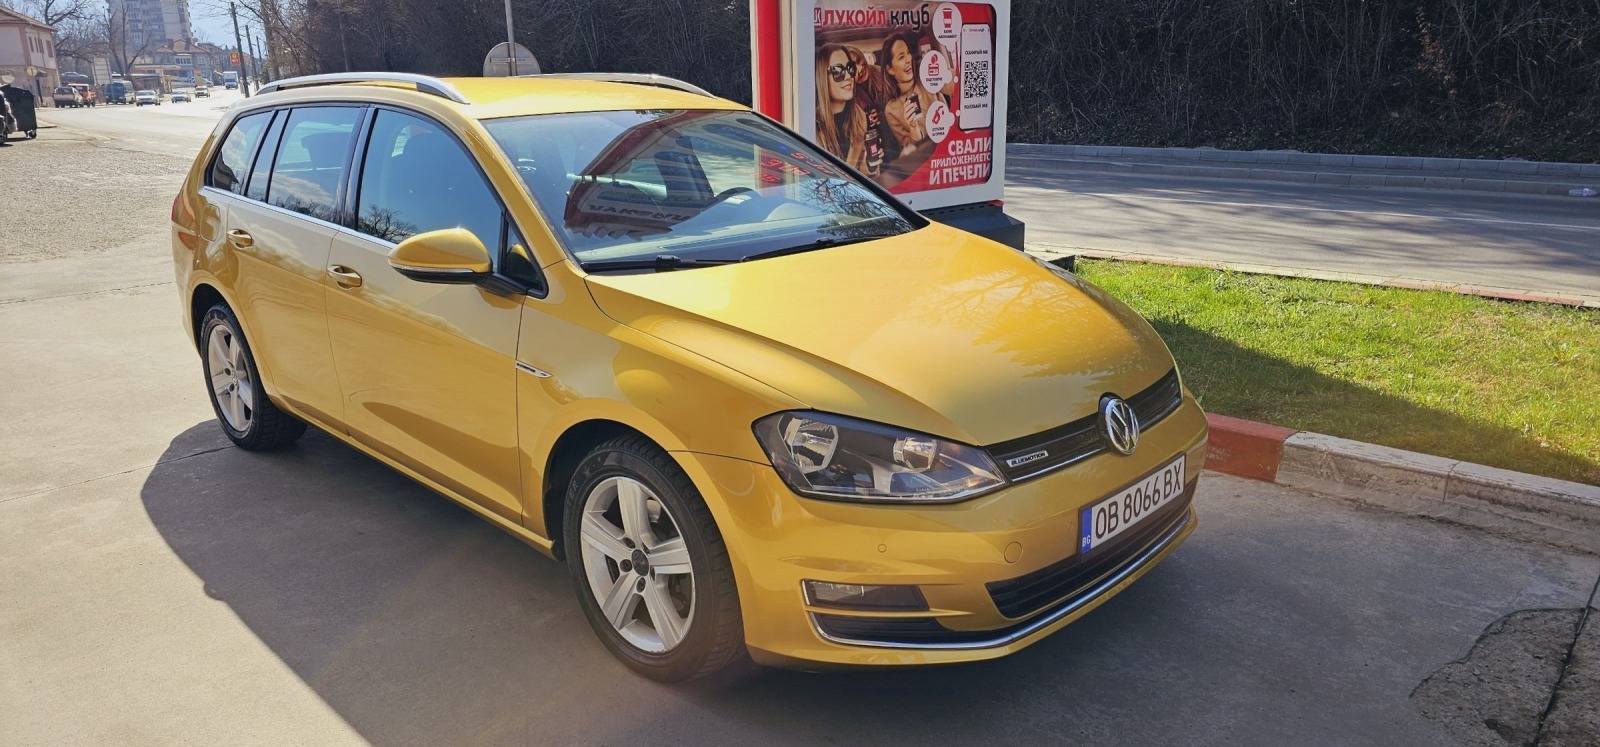 VW Golf ЗаводскиМетан-Подготвен за такси*Автомат - изображение 1